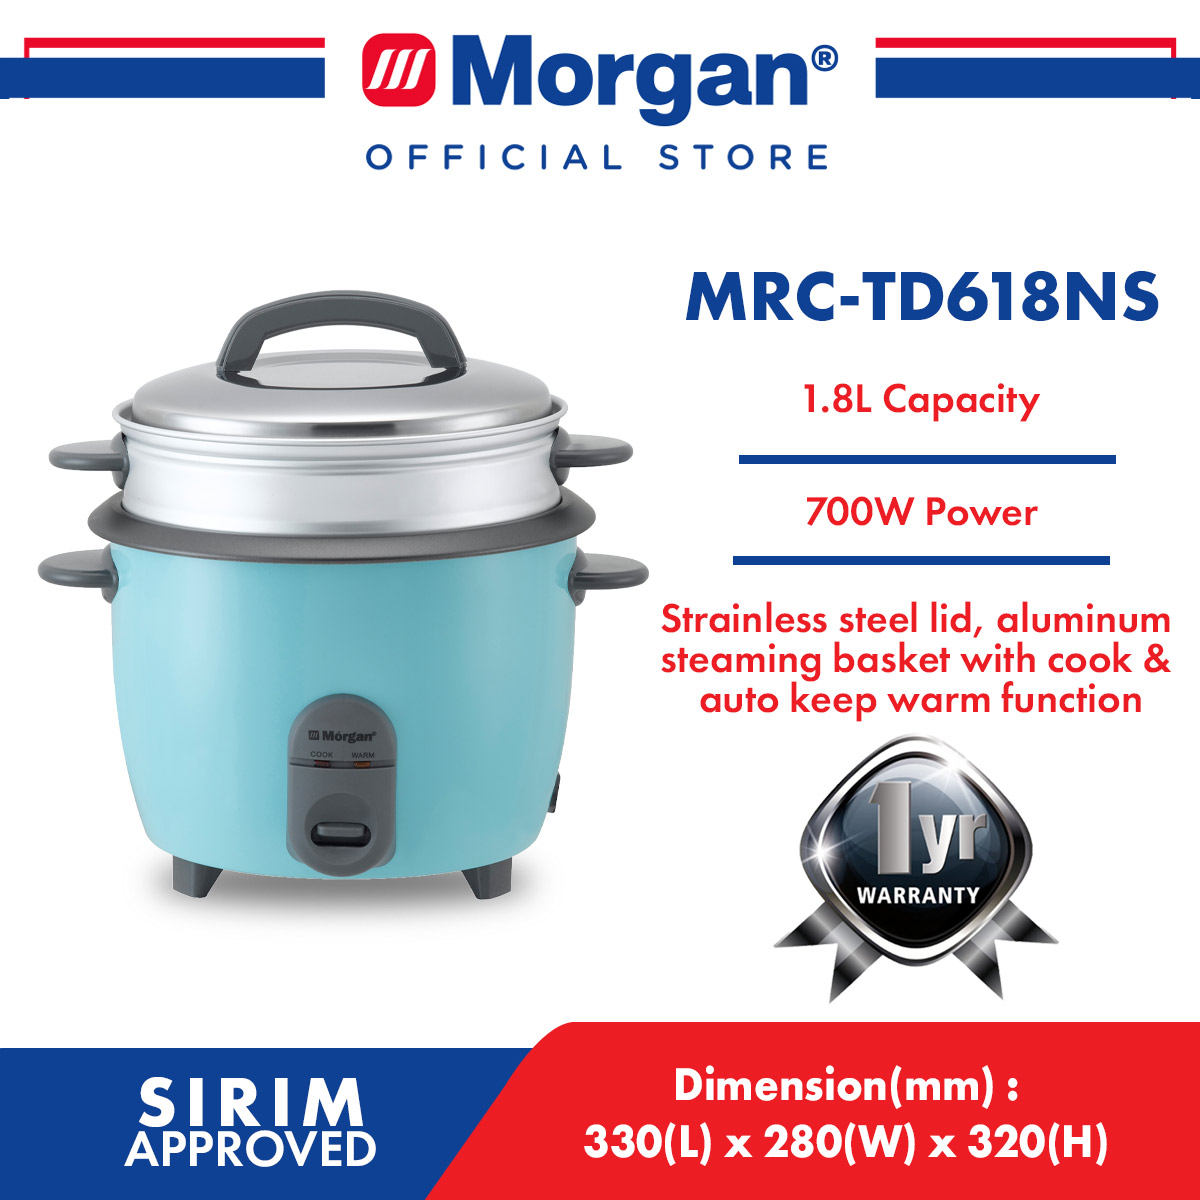 MORGAN MRC-TD618NS TRADITIONAL RICE COOKER 1.8L